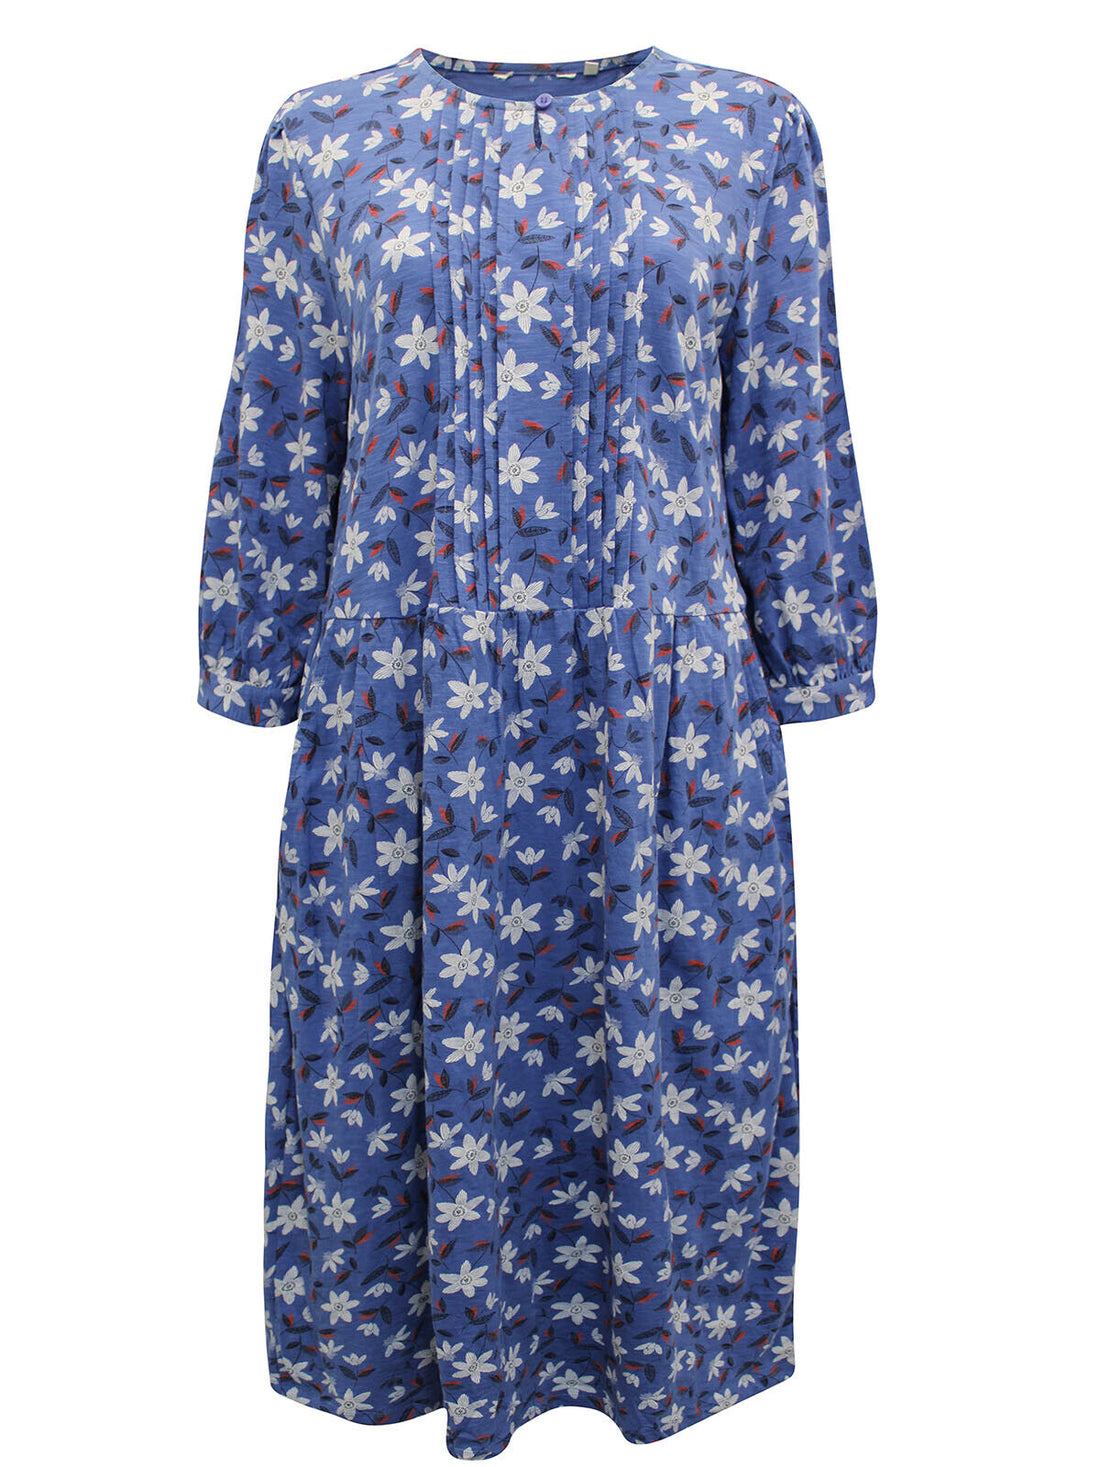 EX Seasalt Blue Wood Anemone Pier Chycarne Jersey Dress in Sizes 8-28 RRP£65